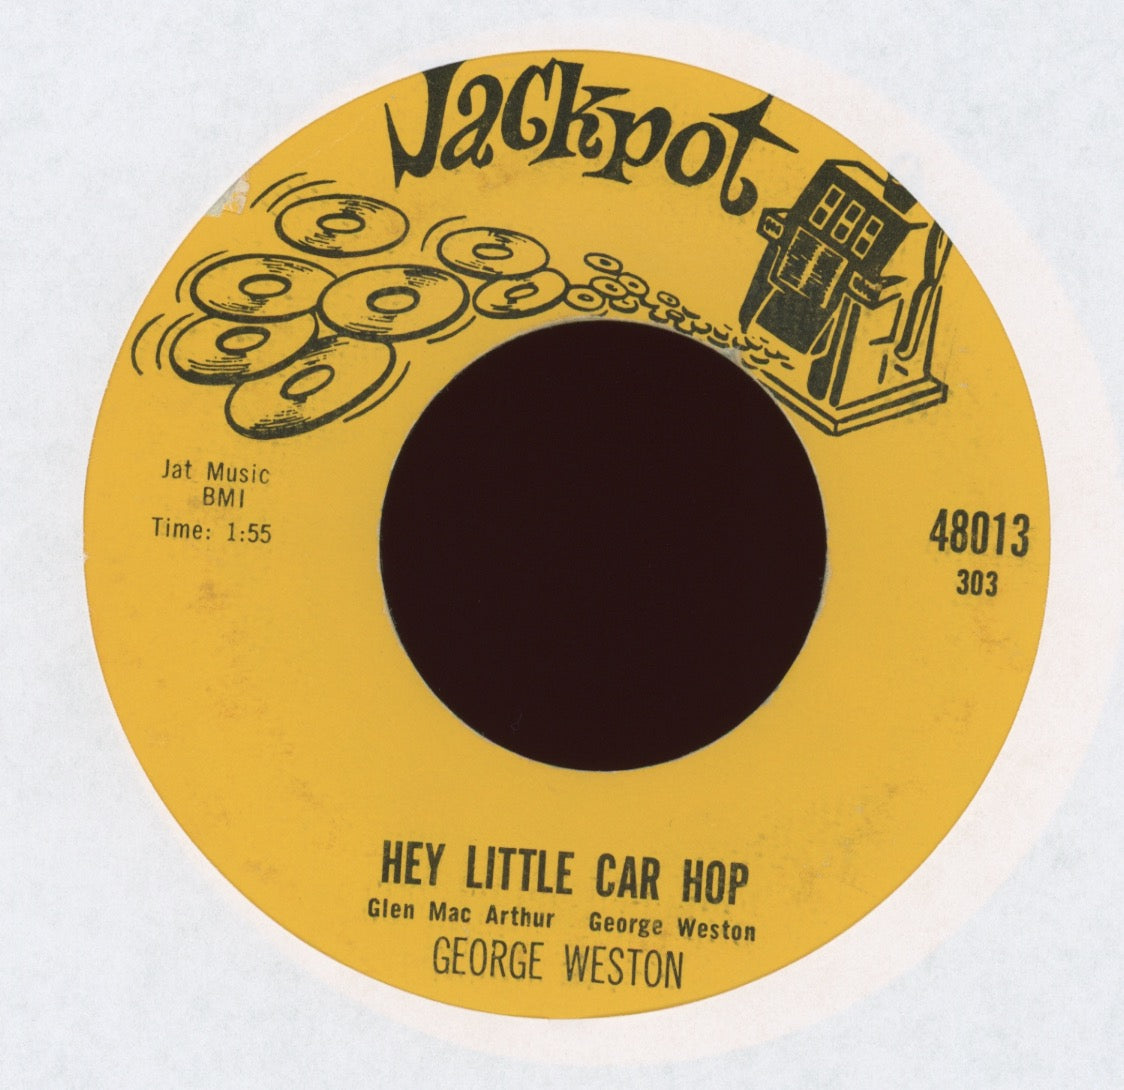 George Weston - Hey Little Car Hop on Jackpot